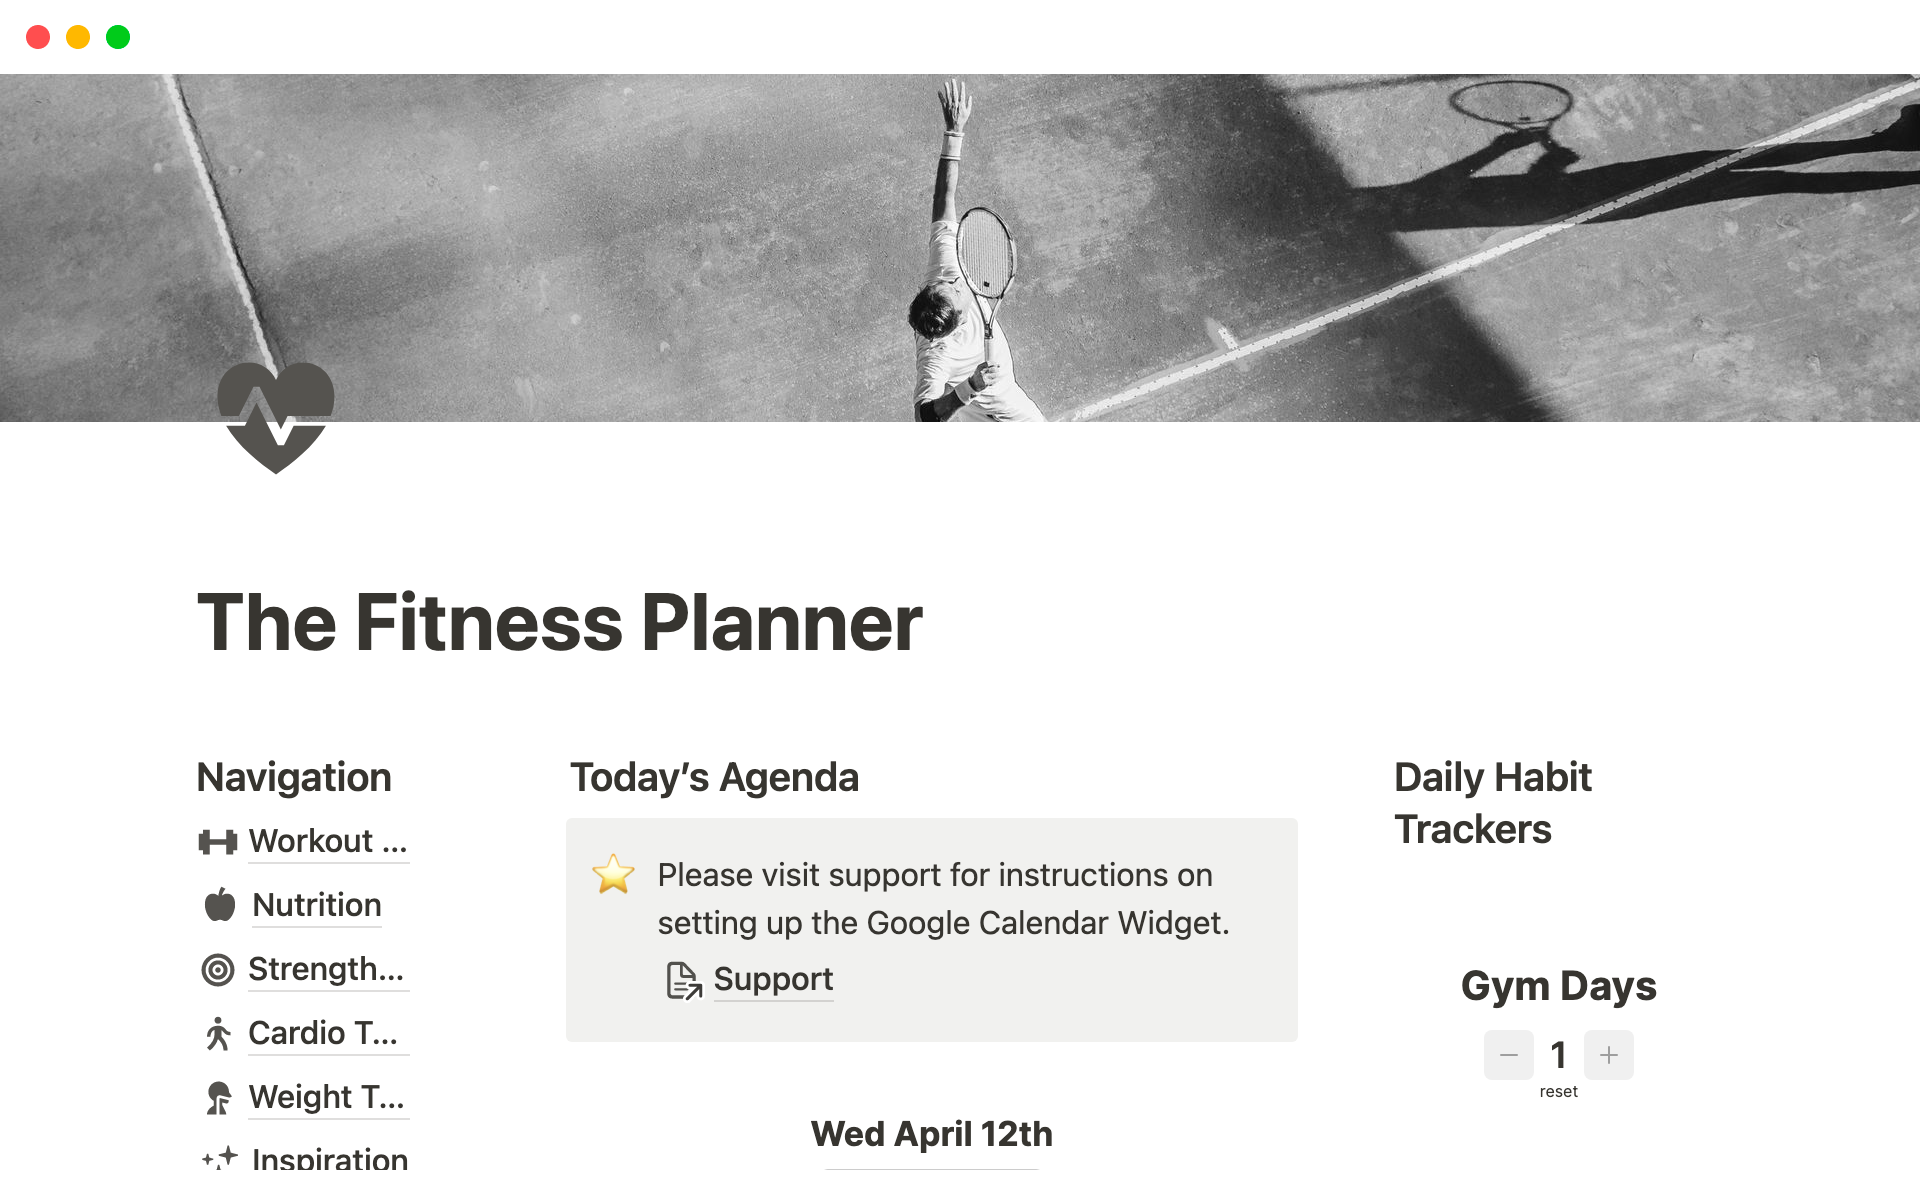 Vista previa de plantilla para Fitness Planner